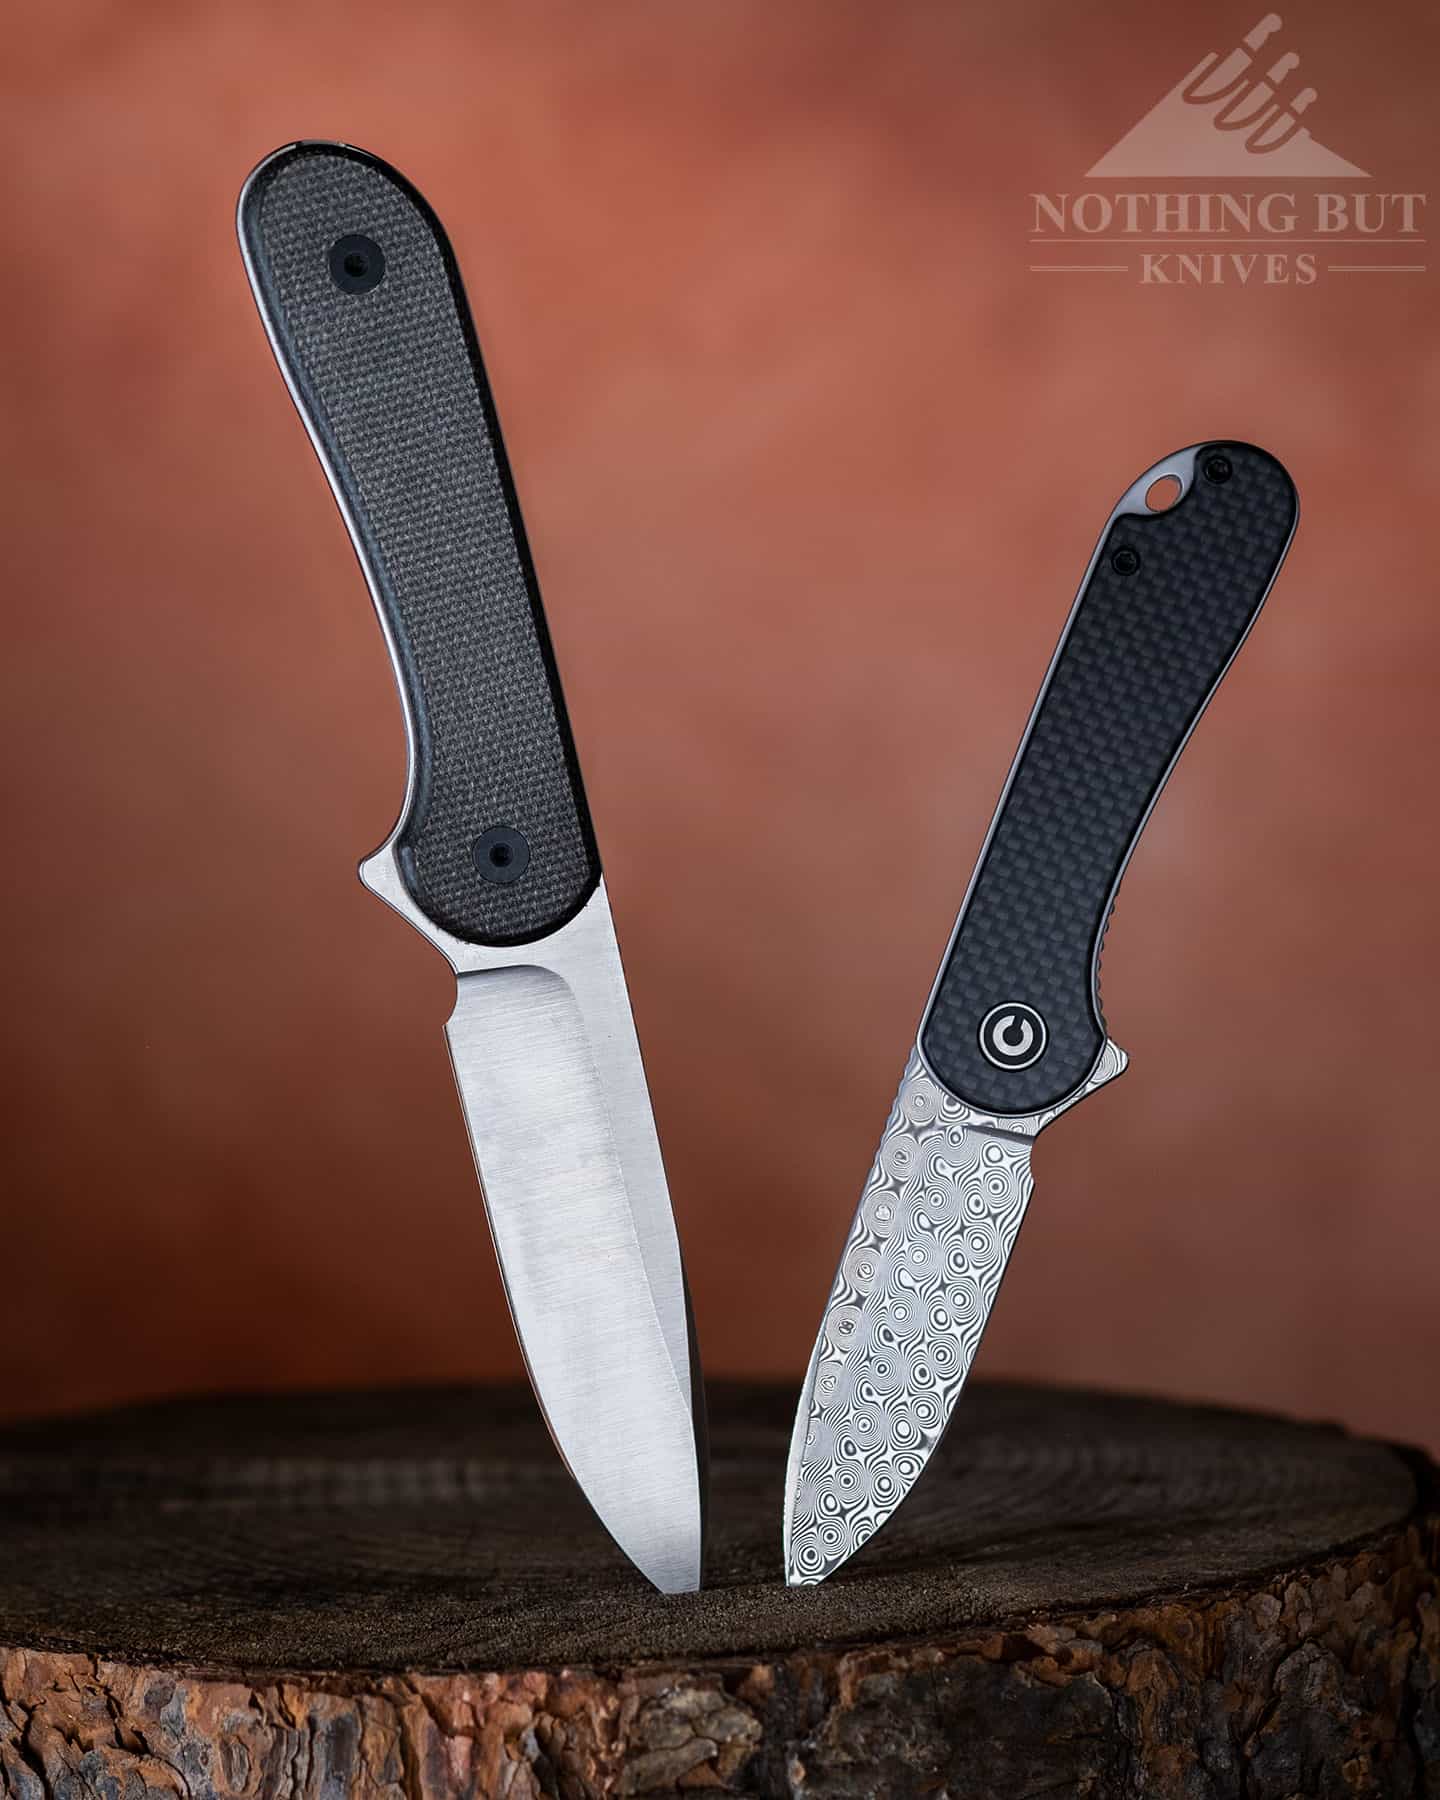 The Civivi Elementum fixed blade is designed like the folding knife version.